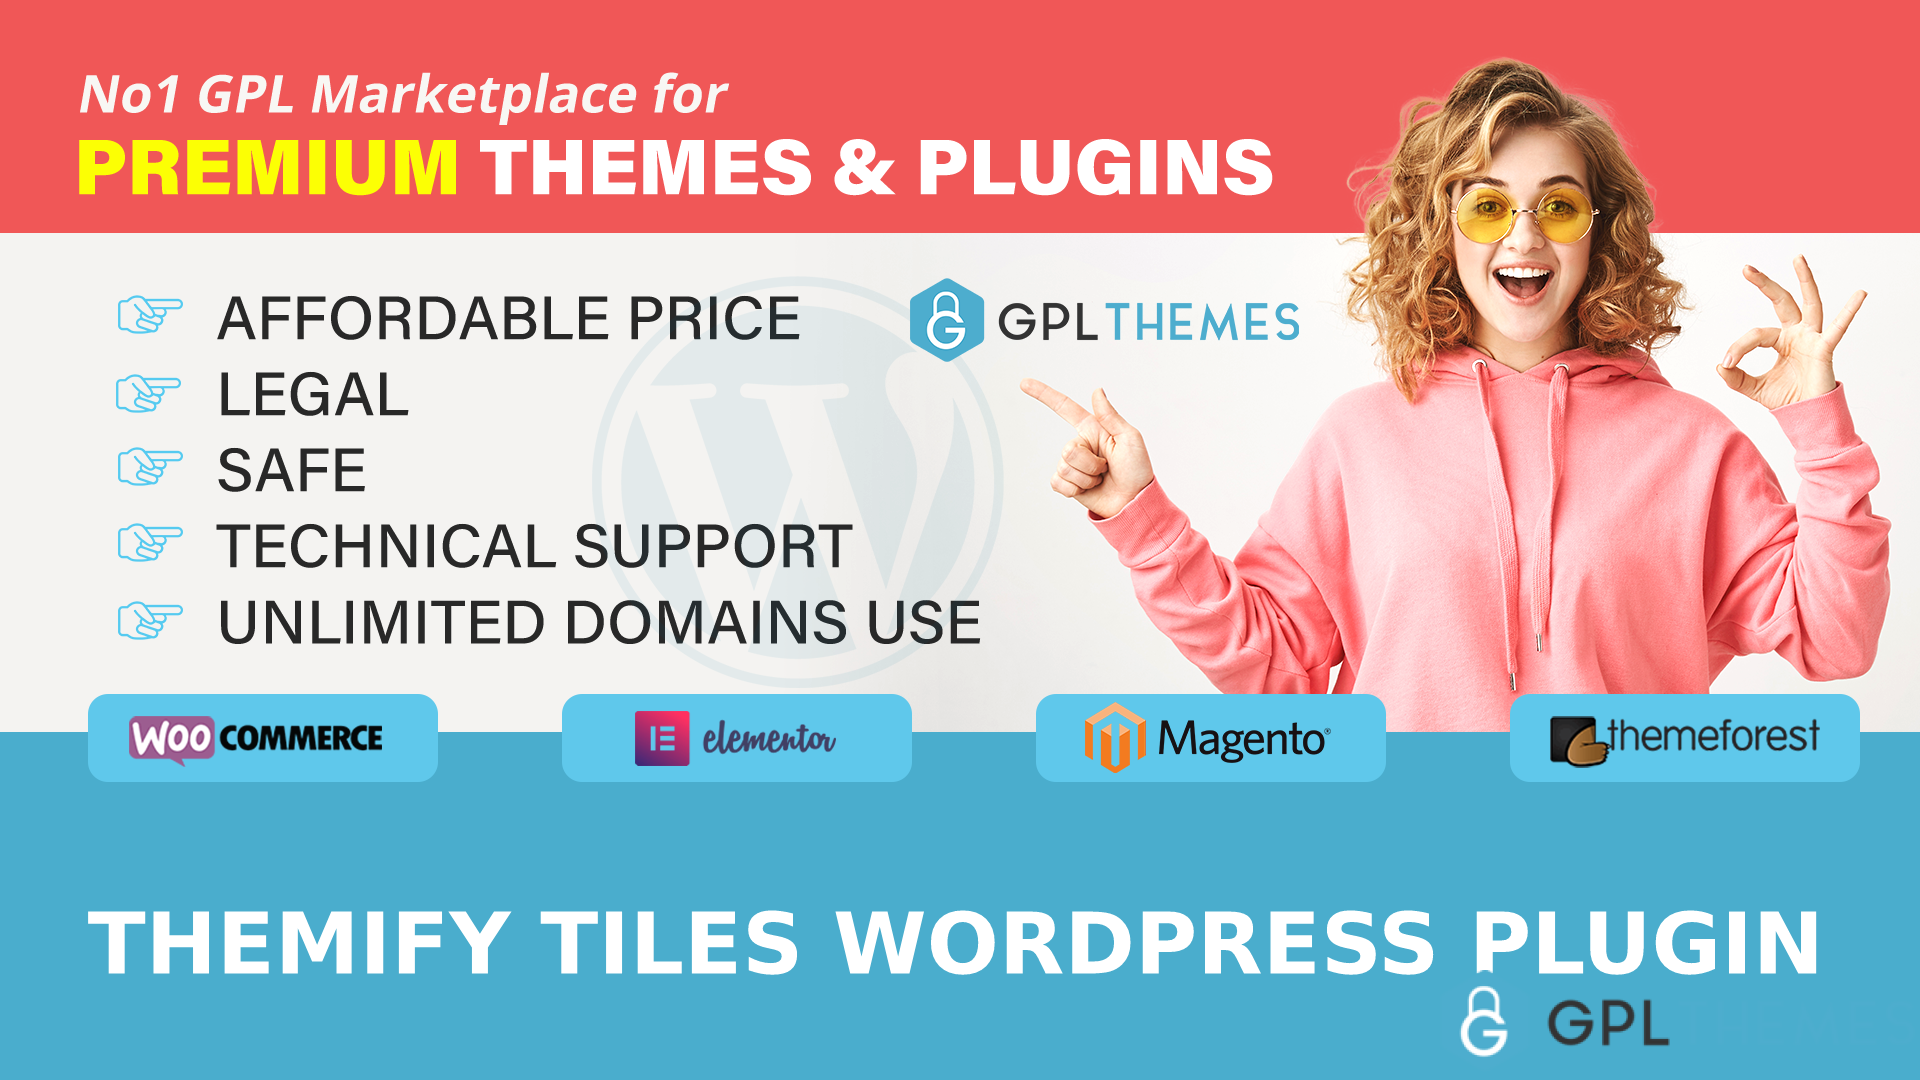 Themify Tiles WordPress Plugin